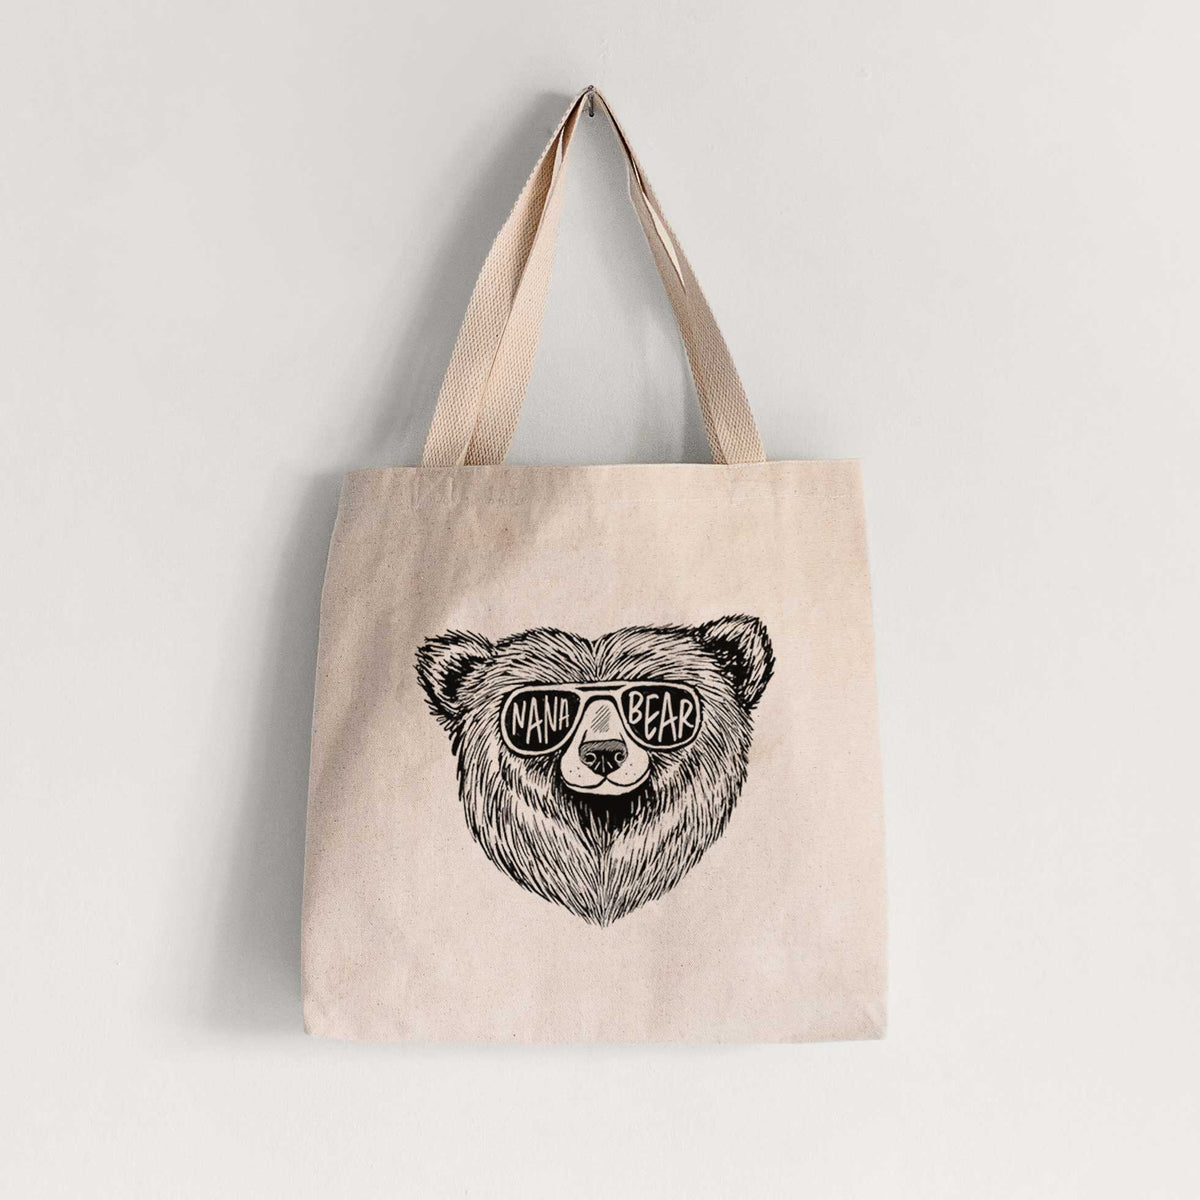 Nana Bear - Tote Bag